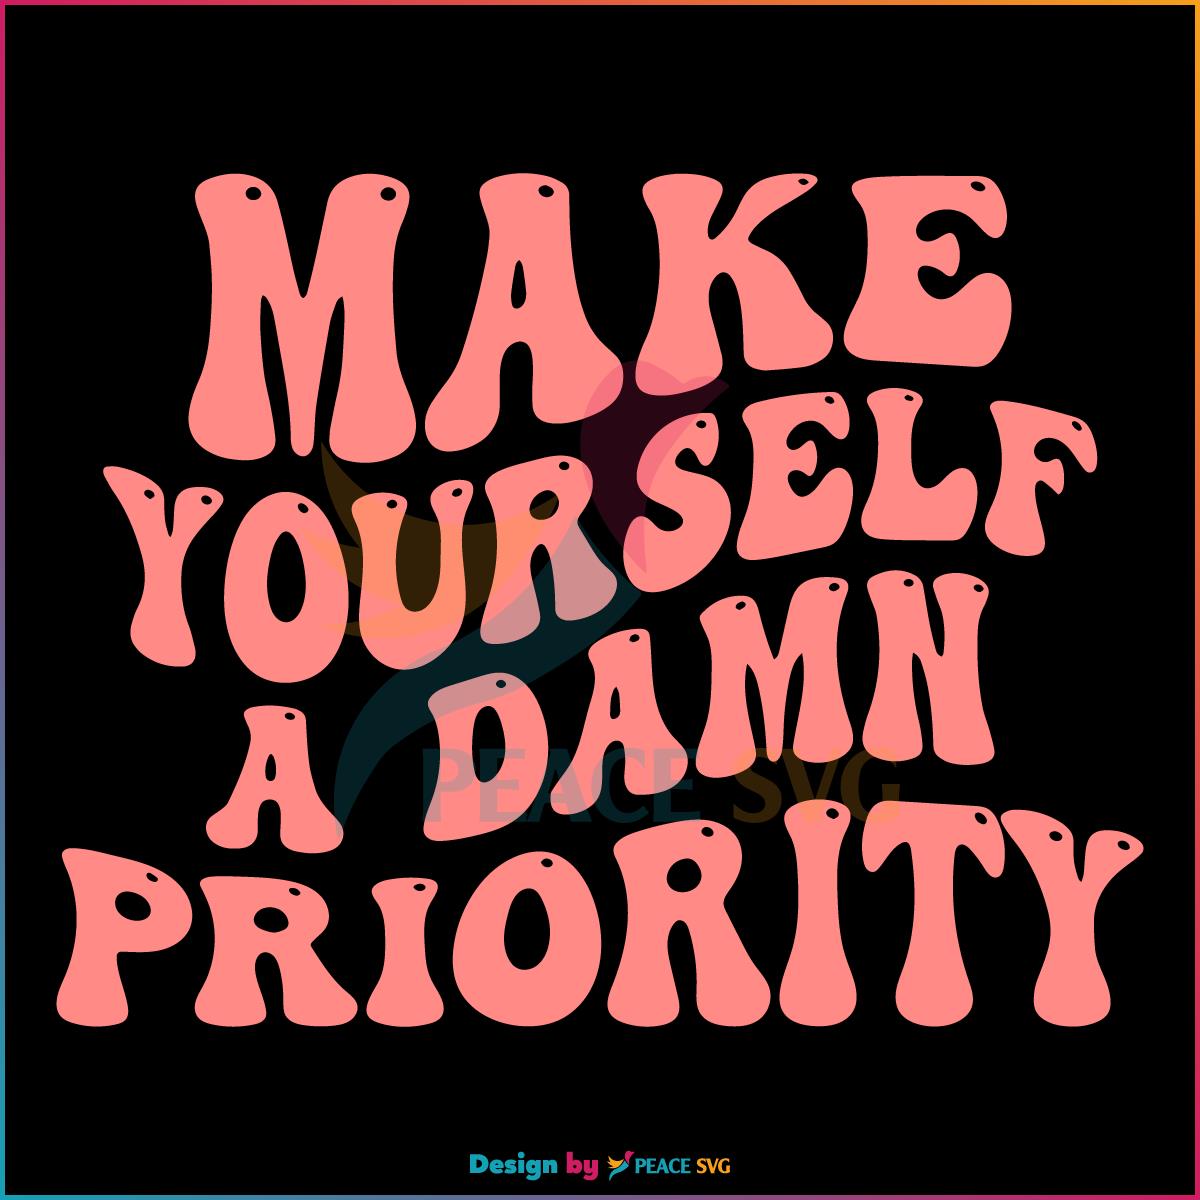 make-yourself-a-damn-priority-mental-health-awareness-svg